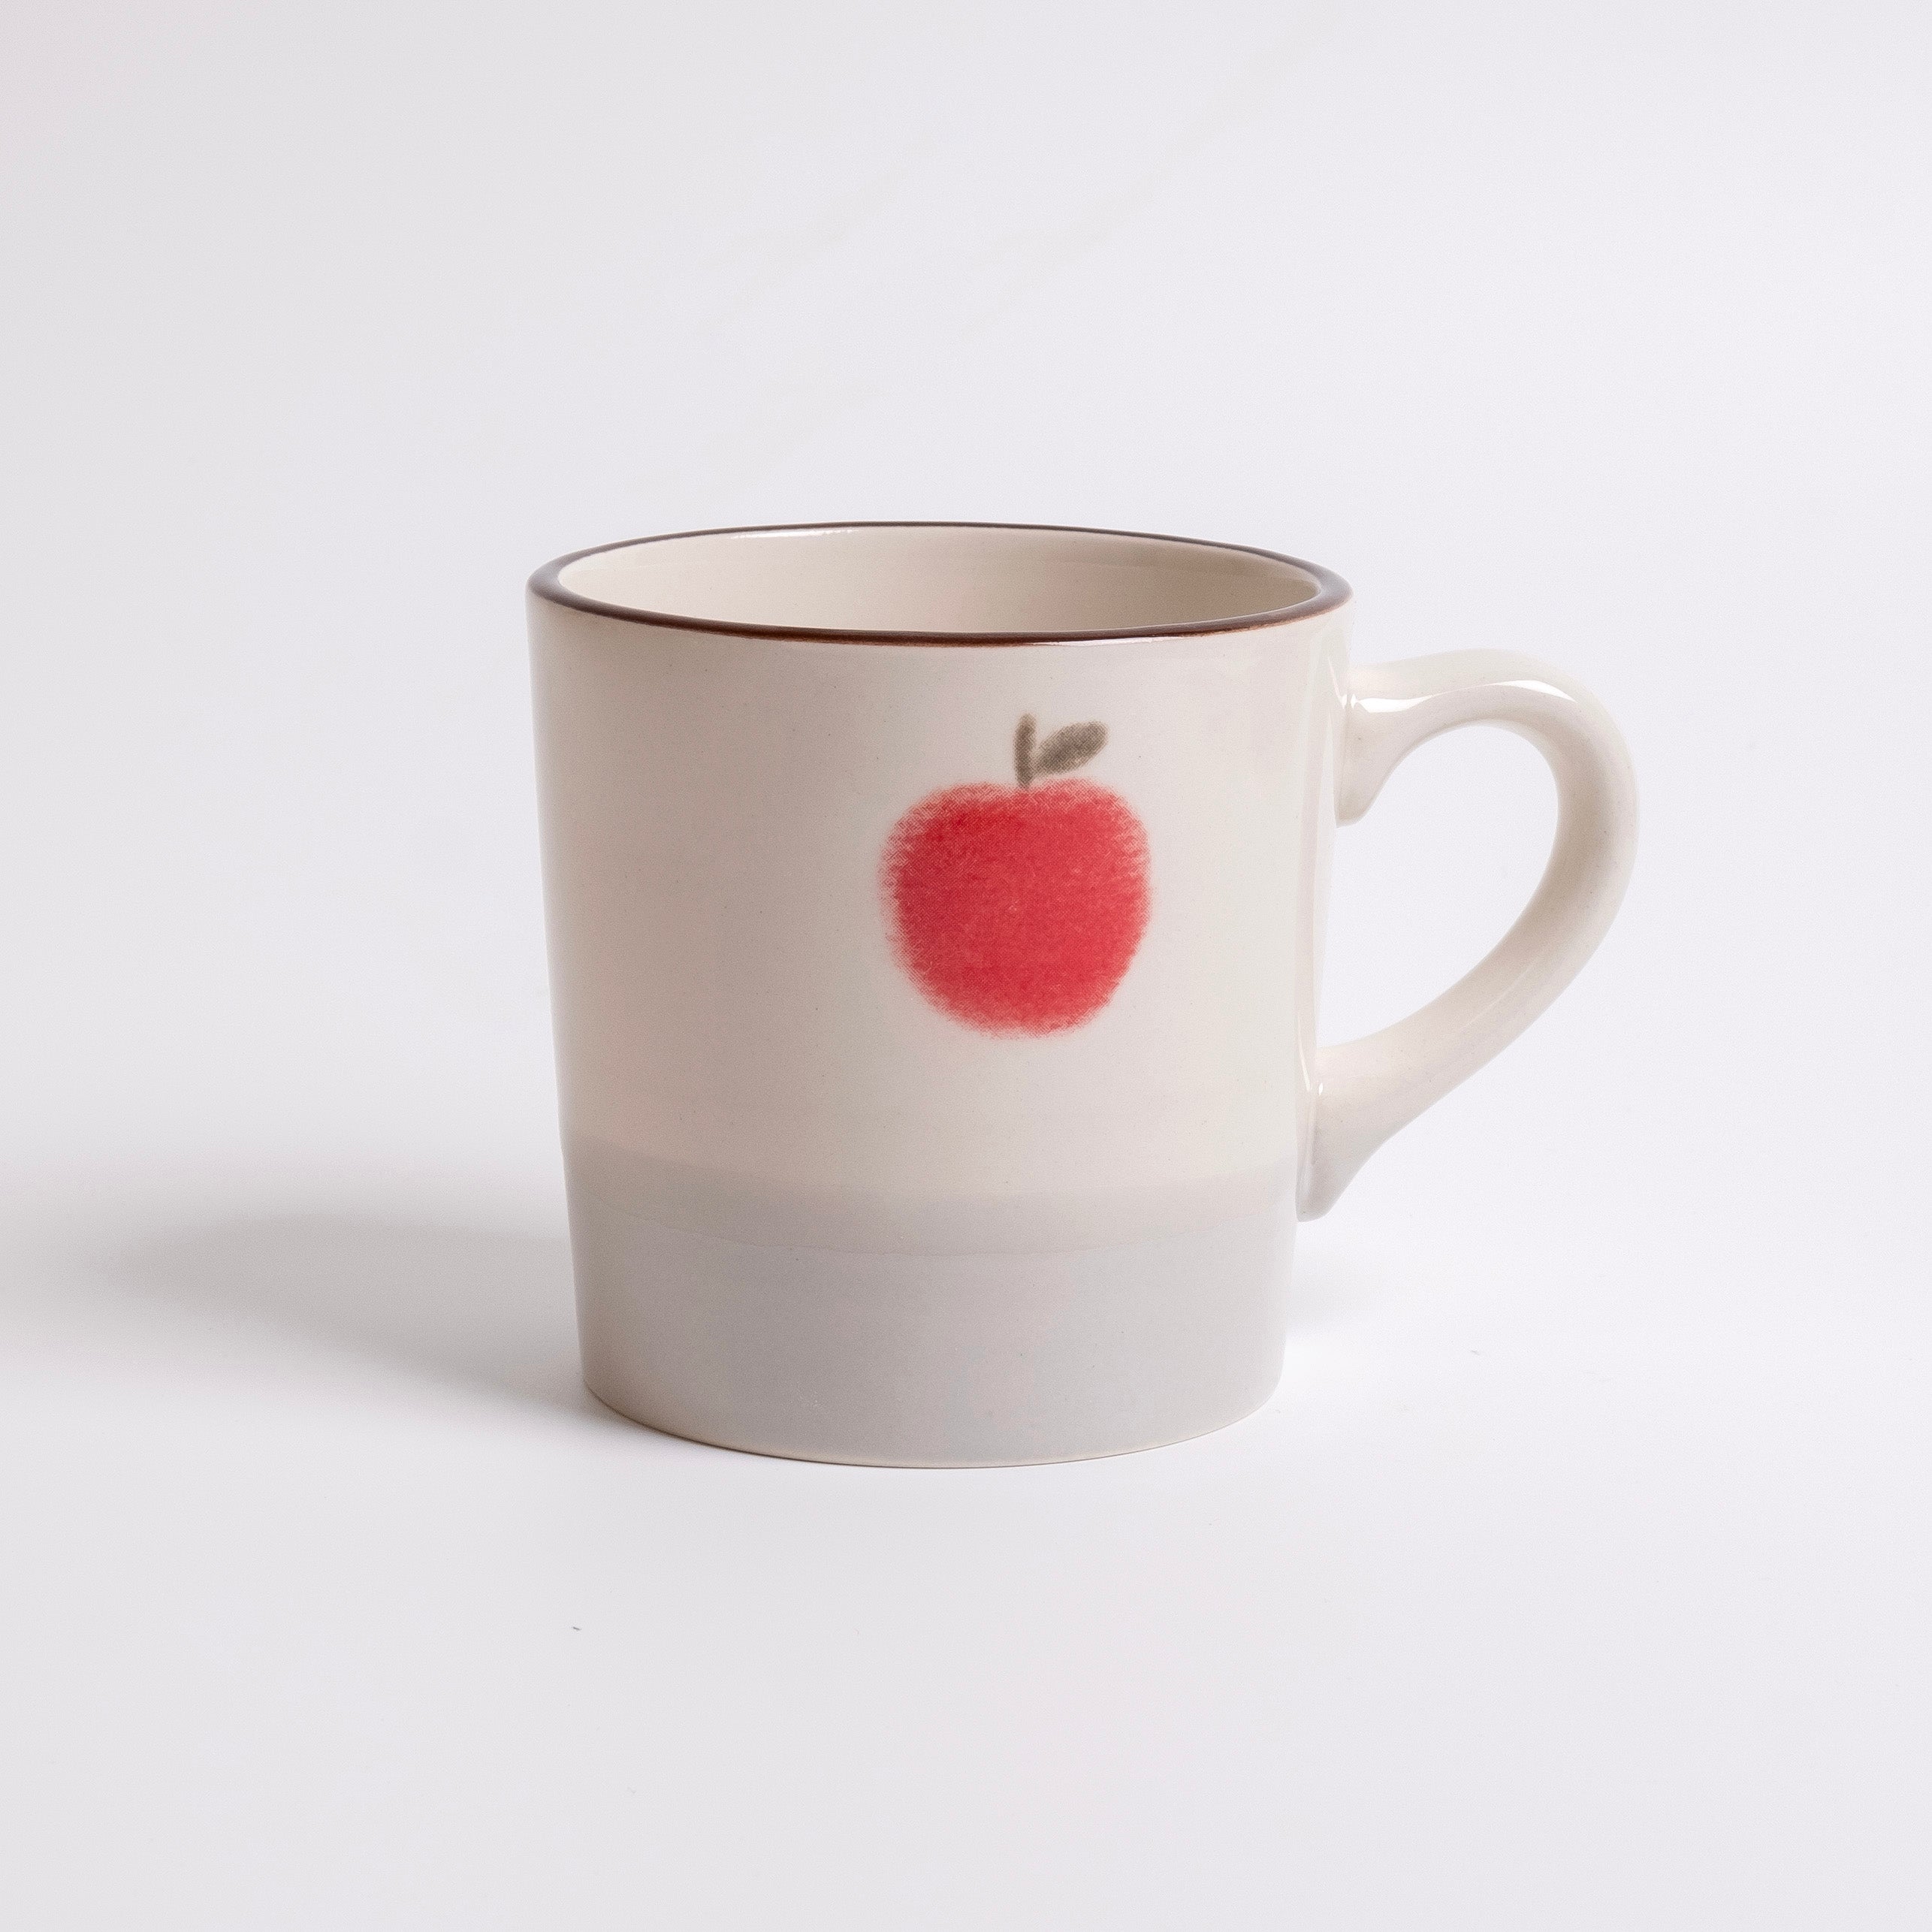 izawa-apple-water-mug-1.jpg